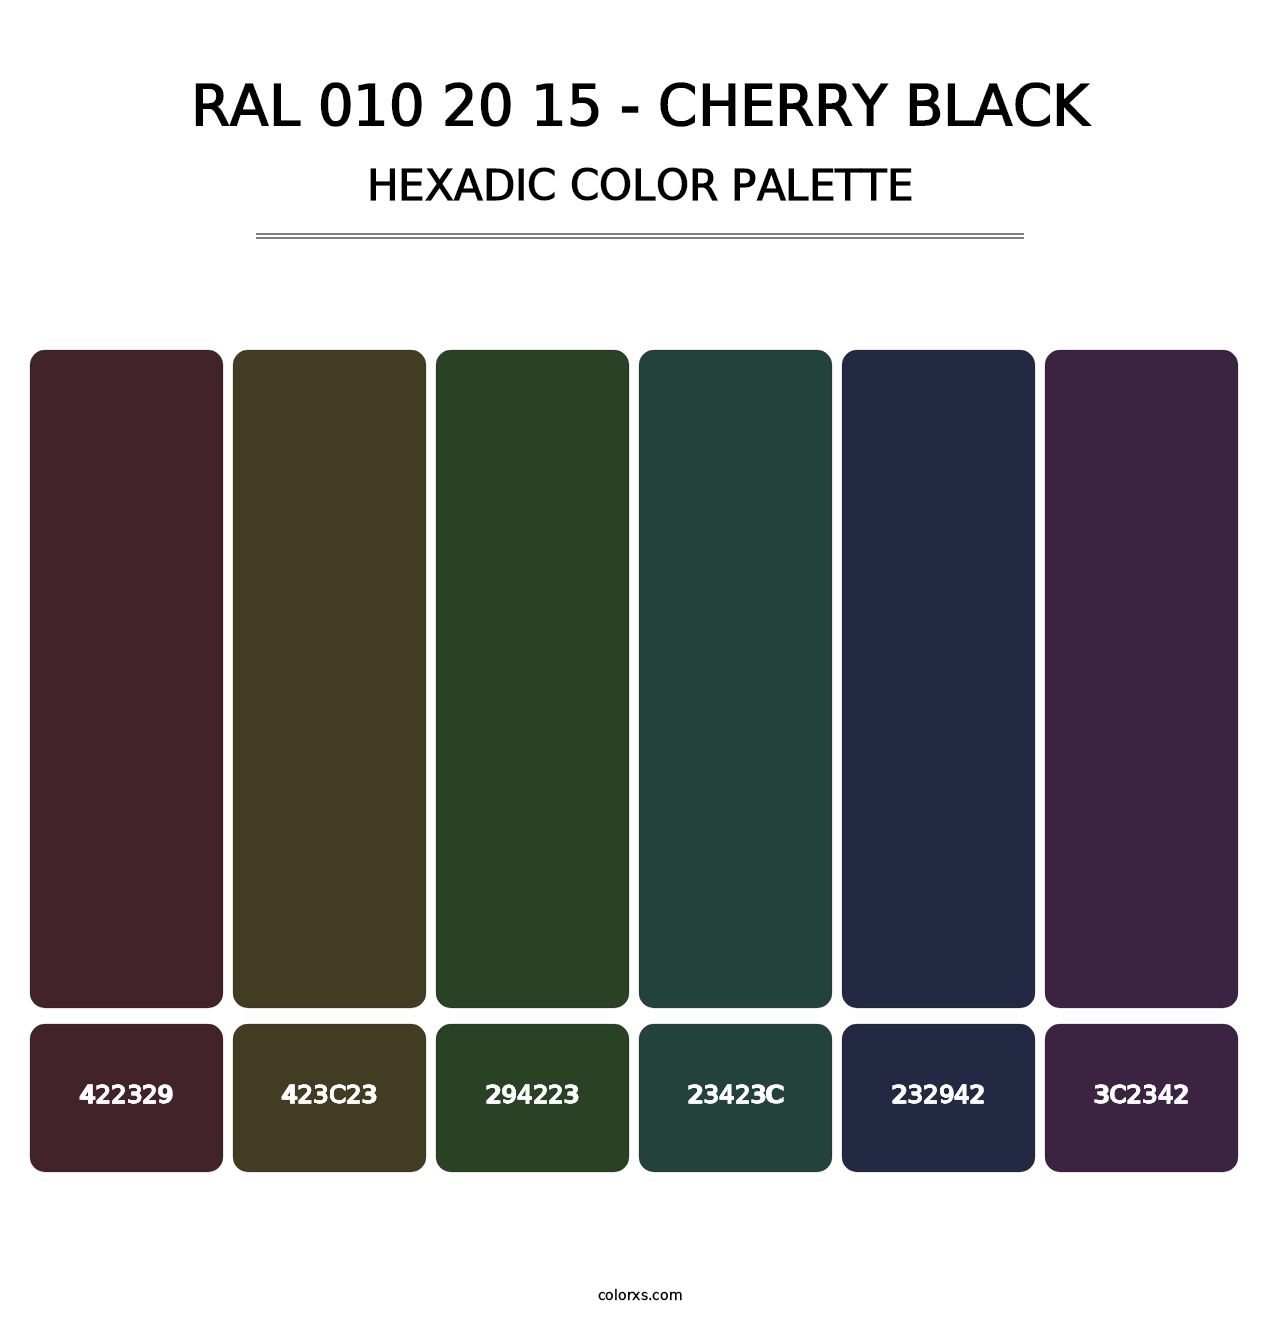 RAL 010 20 15 - Cherry Black - Hexadic Color Palette